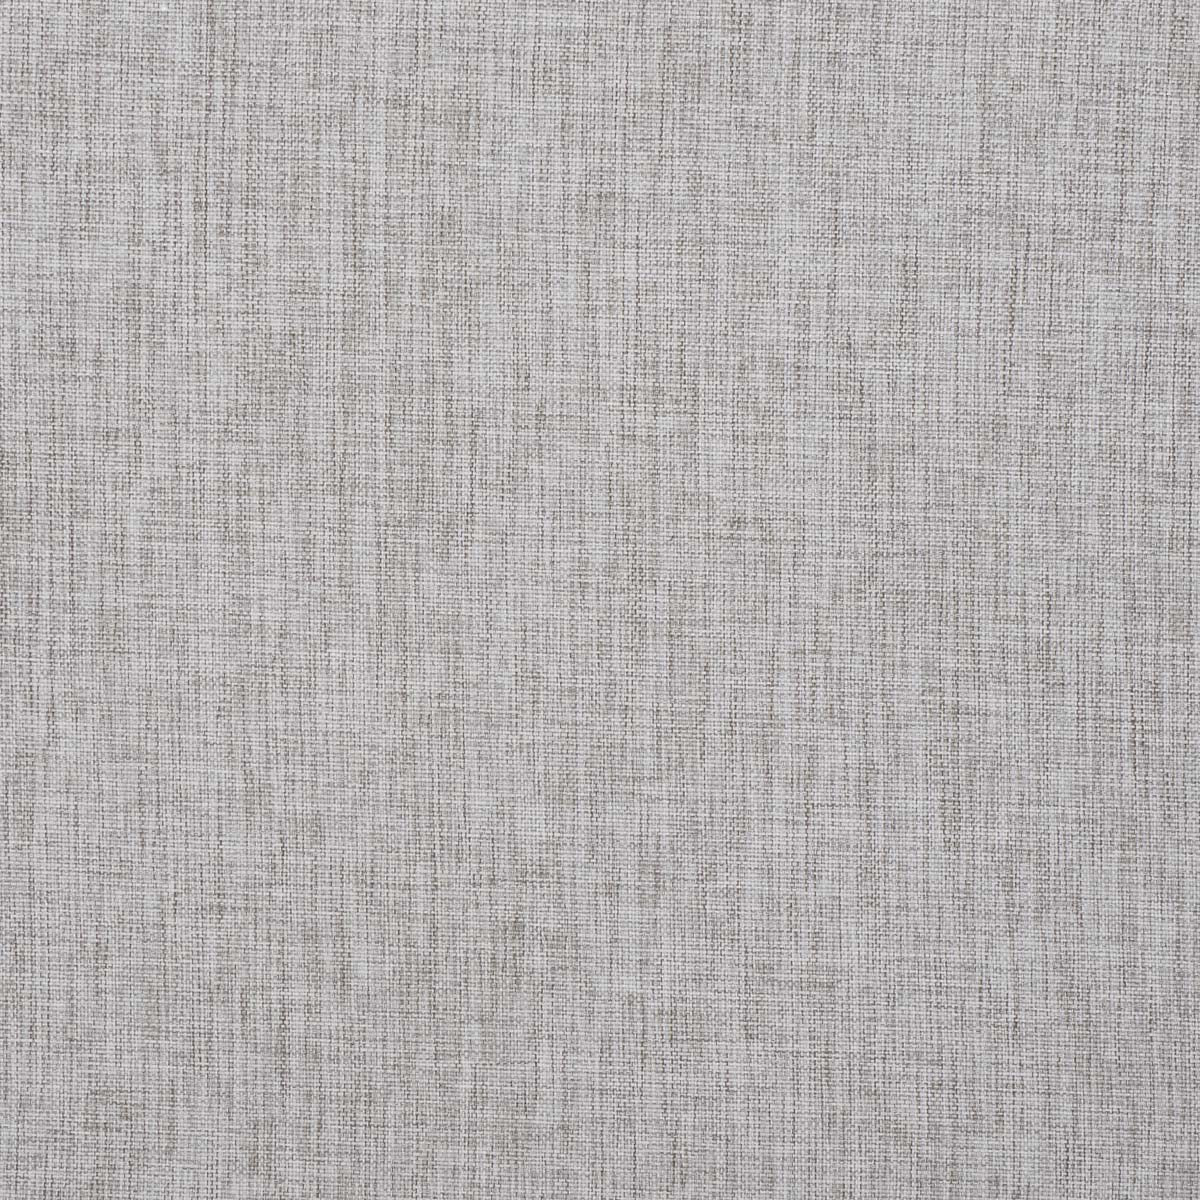 Grey Linen/Cream